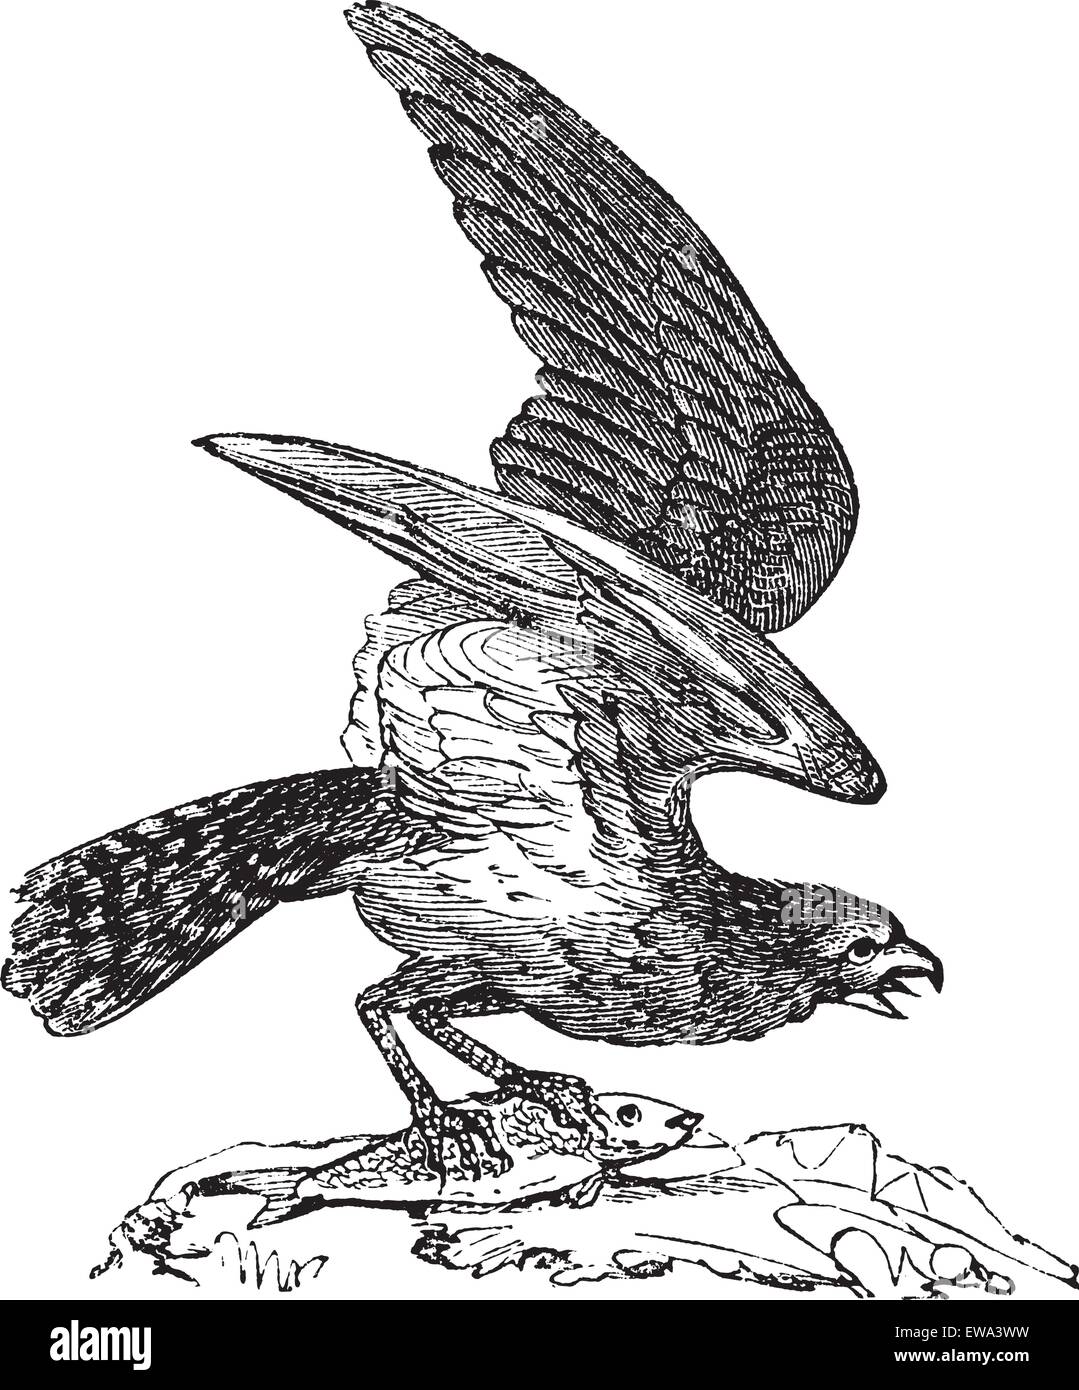 Osprey of America, Pandion carolinensis, fish eagle or sea hawk, vintage engraved illustration, Trousset encyclopedia (1886 - 1891). Stock Vector